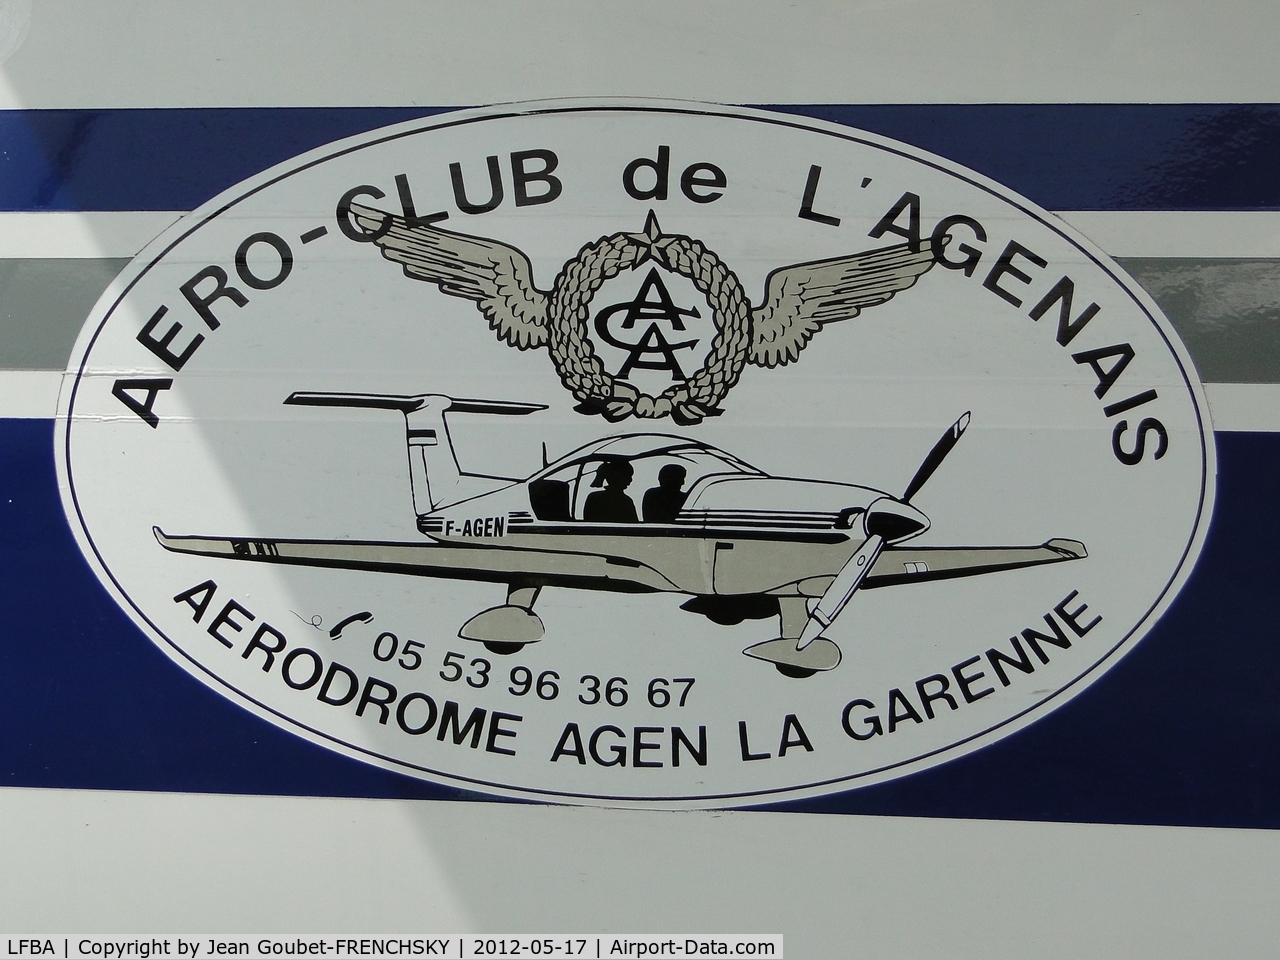 Agen Airport, La Garenne Airport France (LFBA) - F-BUEO